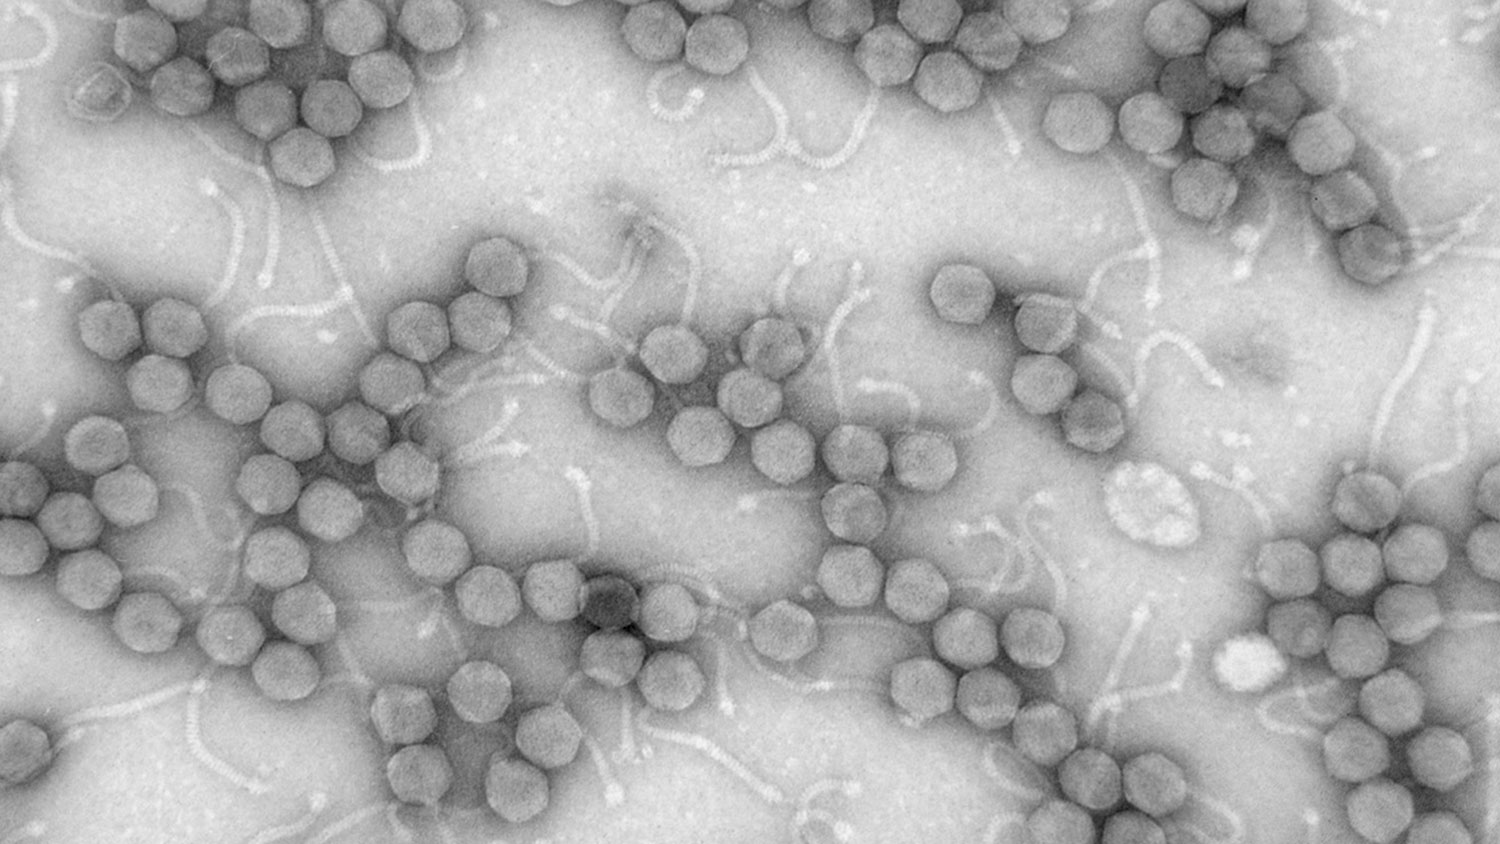 Image of Mycobacterium smegmatis phage MicroWolf; H. Hendricks, NC State Phage Hunters.